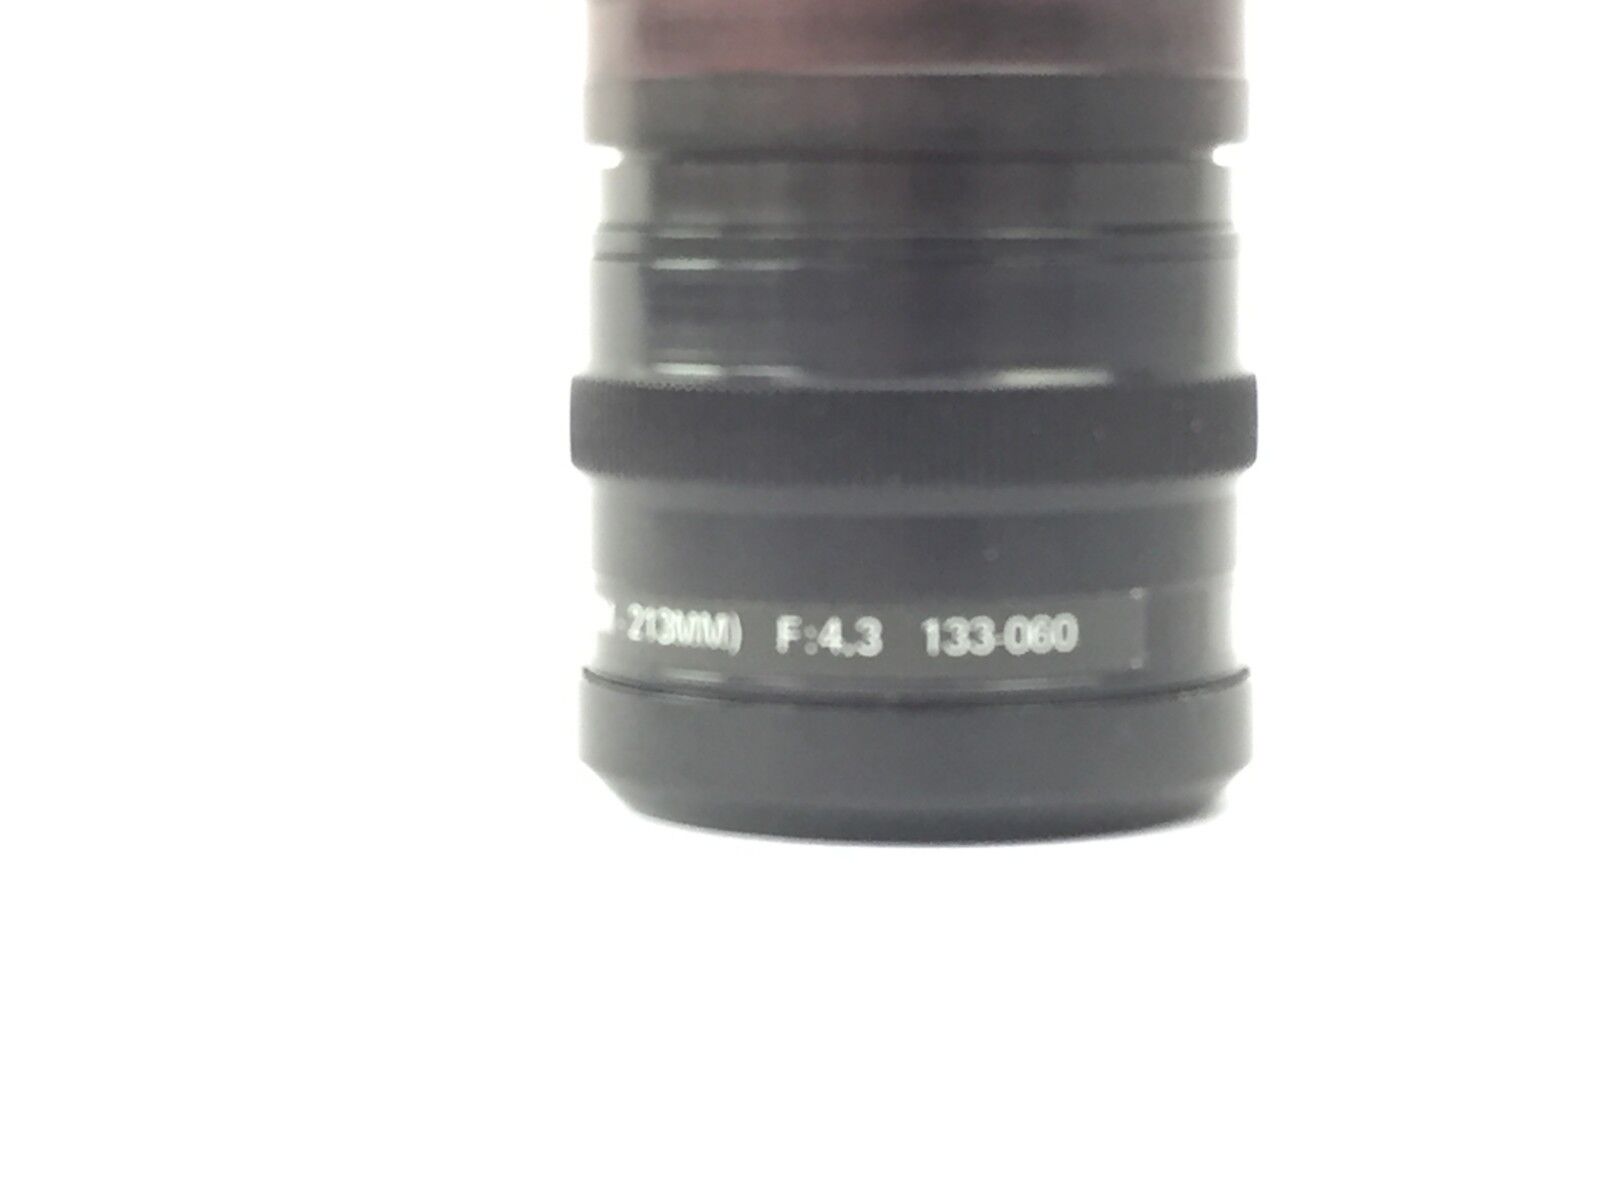 Buhl Optical 5.8"-8.4" (147mm-213mm) VFL f:4.3 133-060